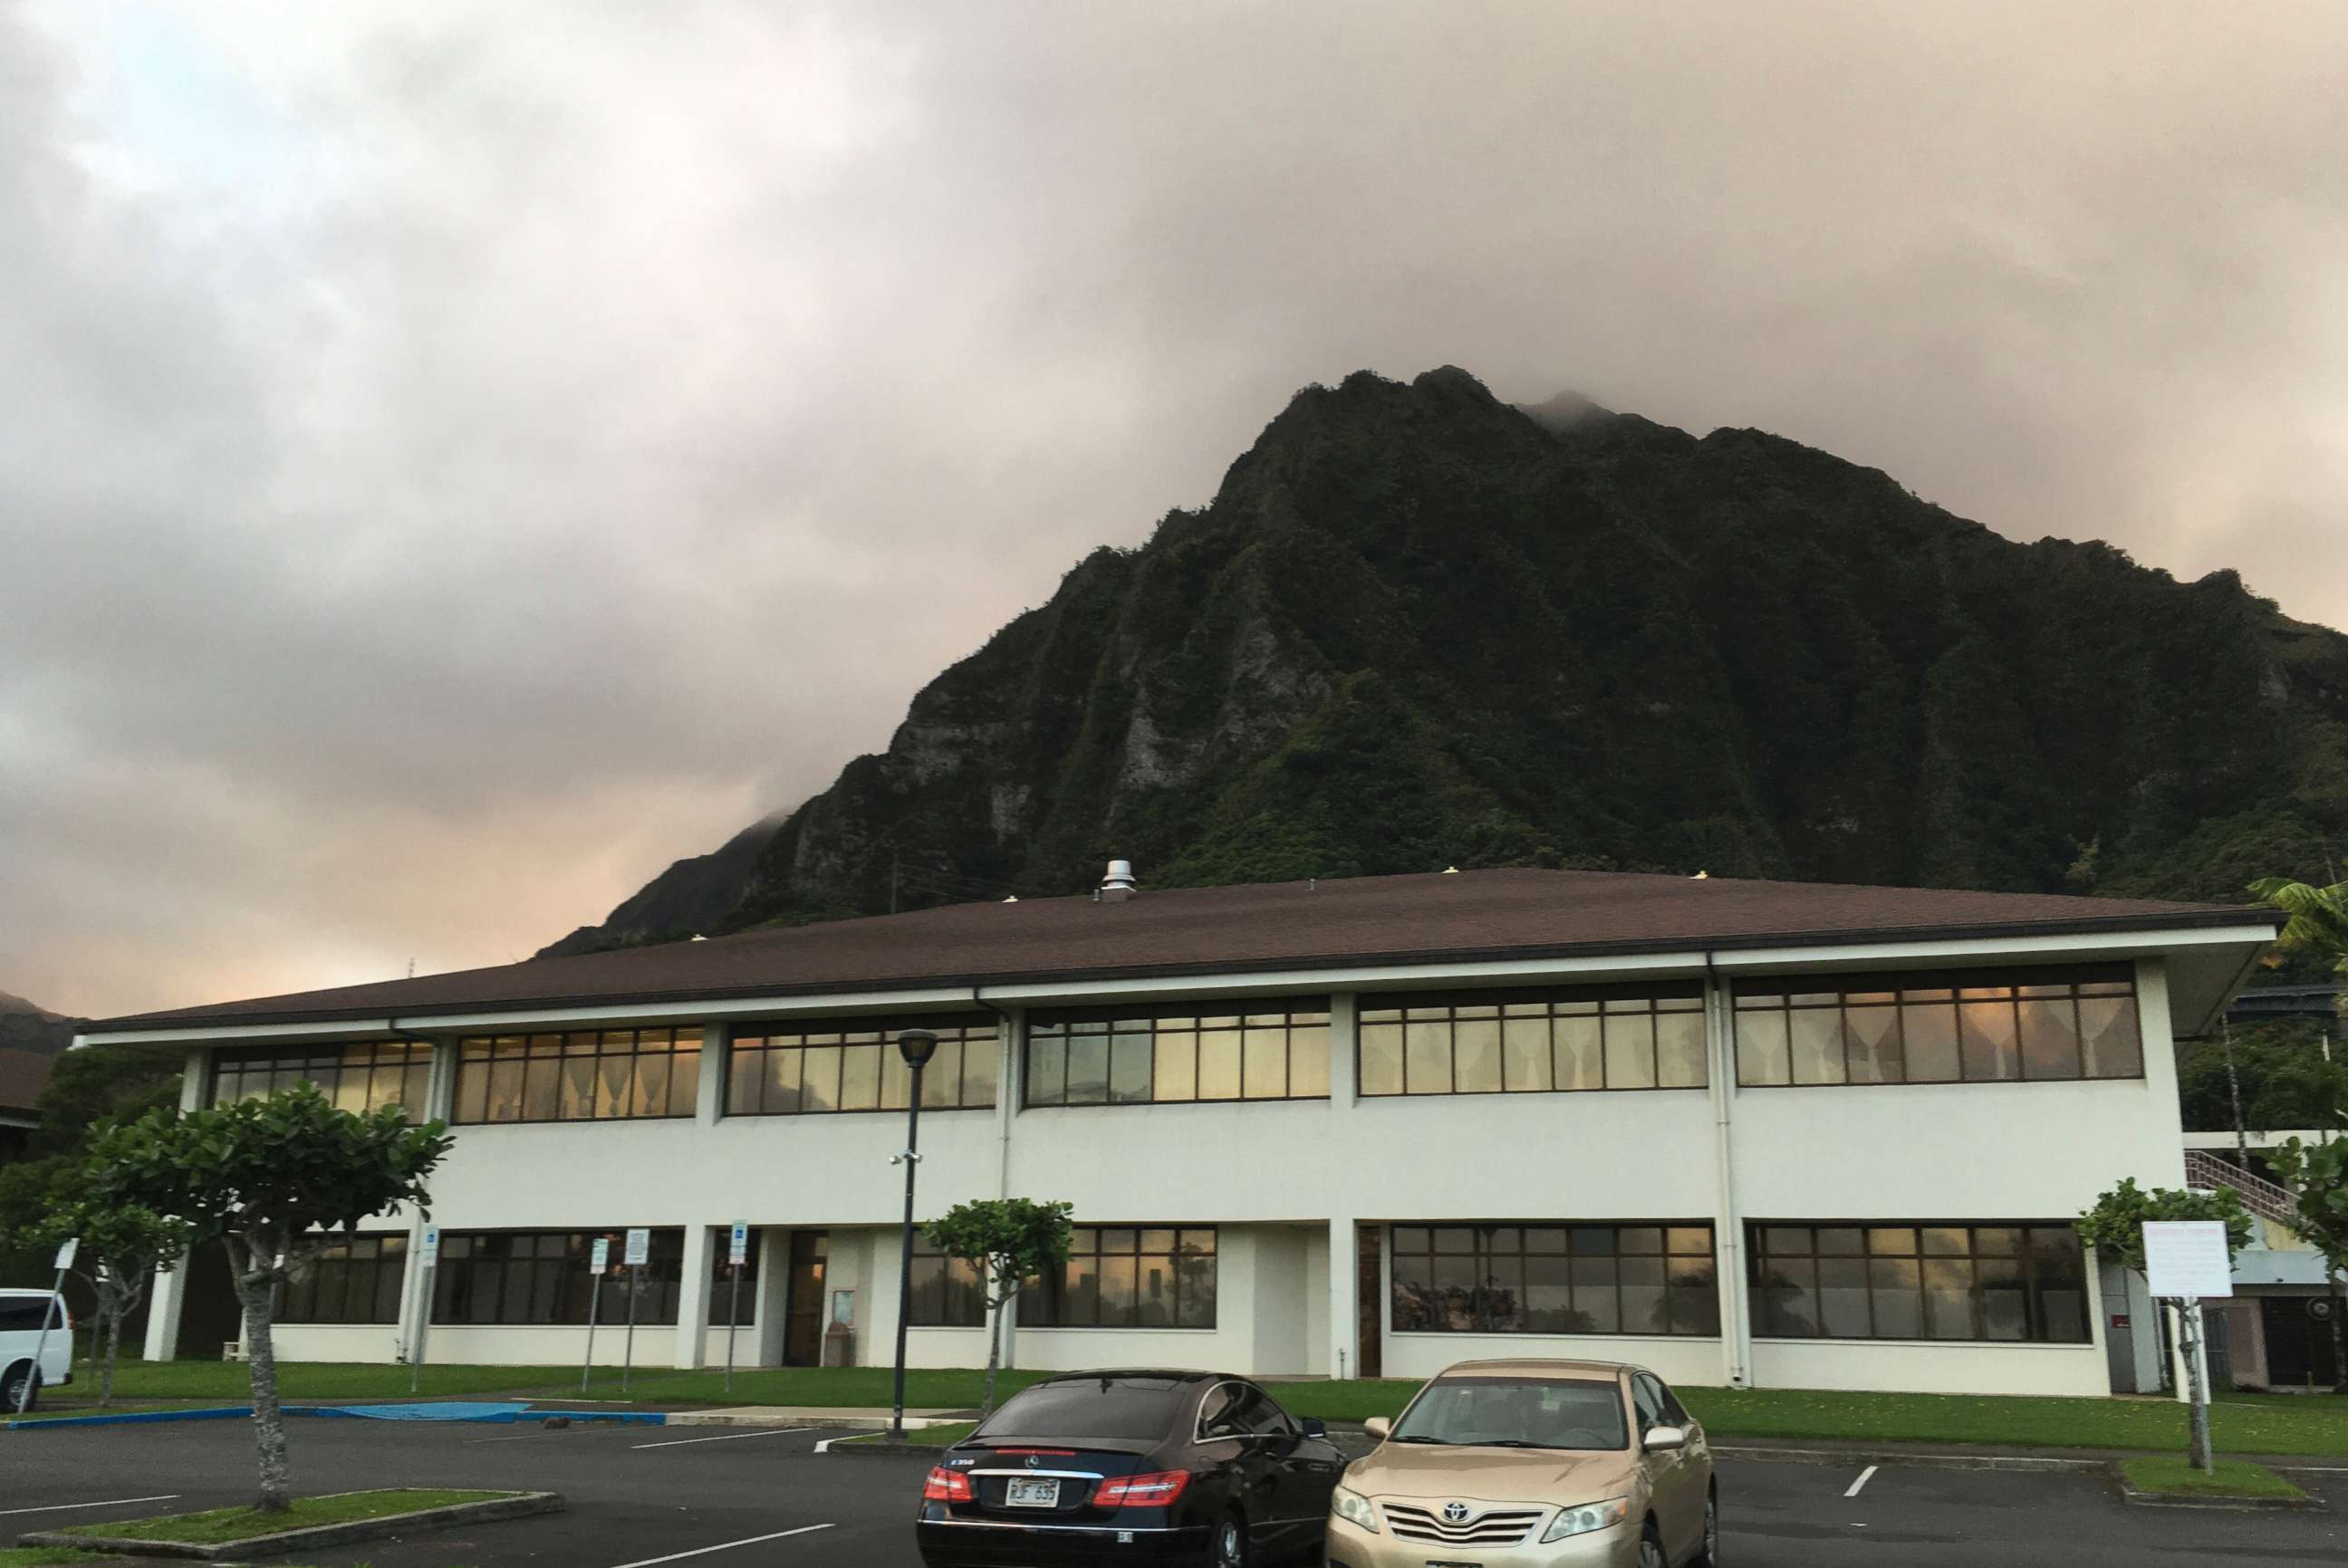 Escaped killer Randall Saito returns to Hawaii State Hospital